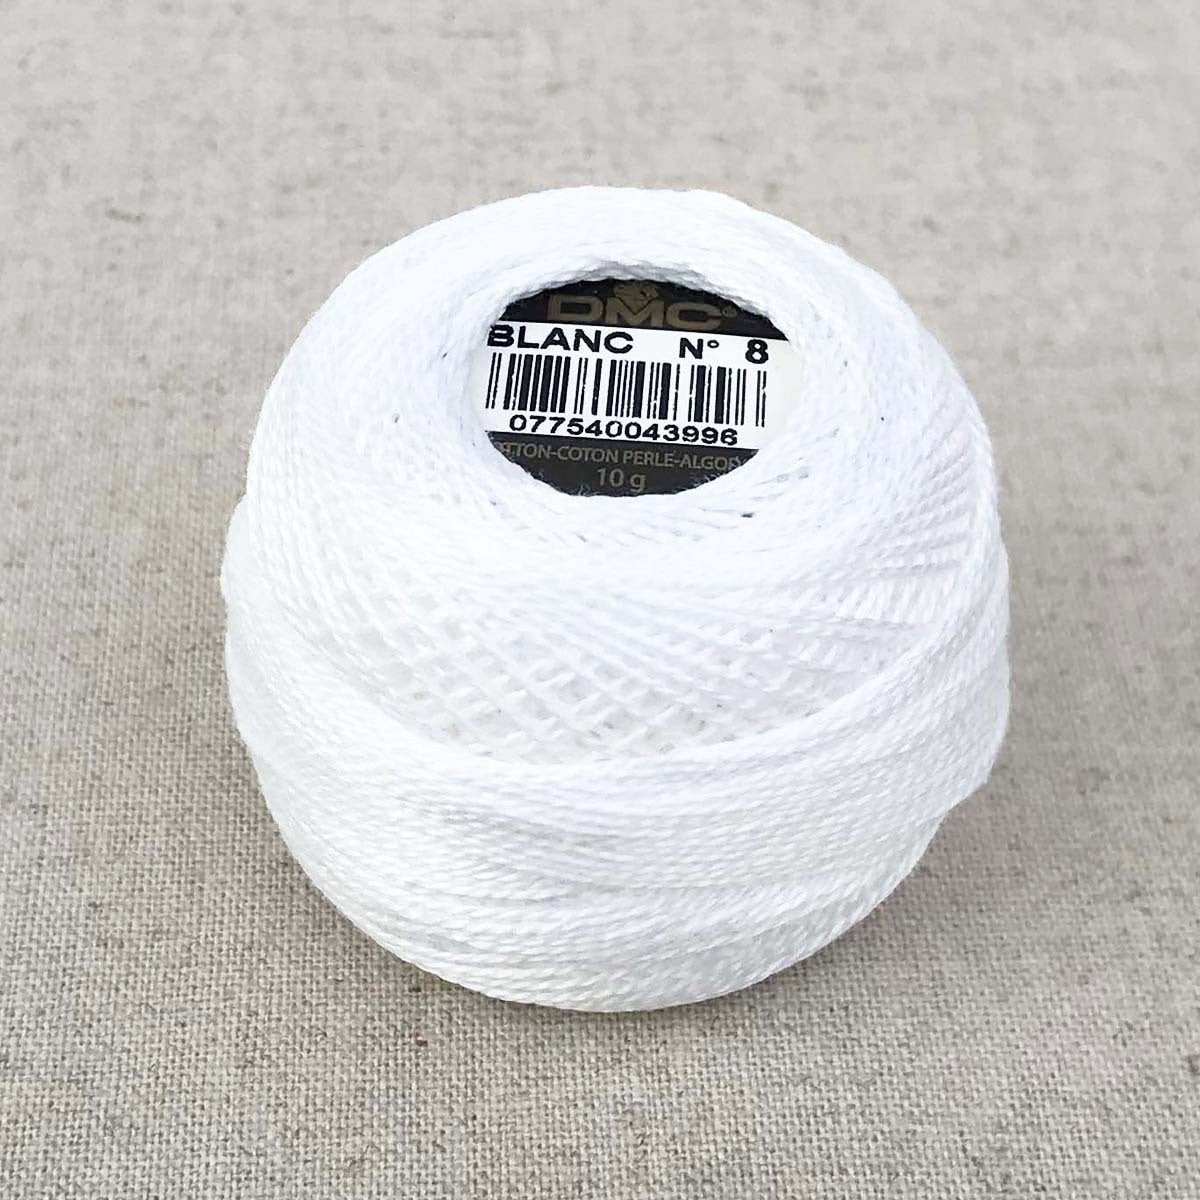 DMC Pearl Cotton Ball Size 8 White